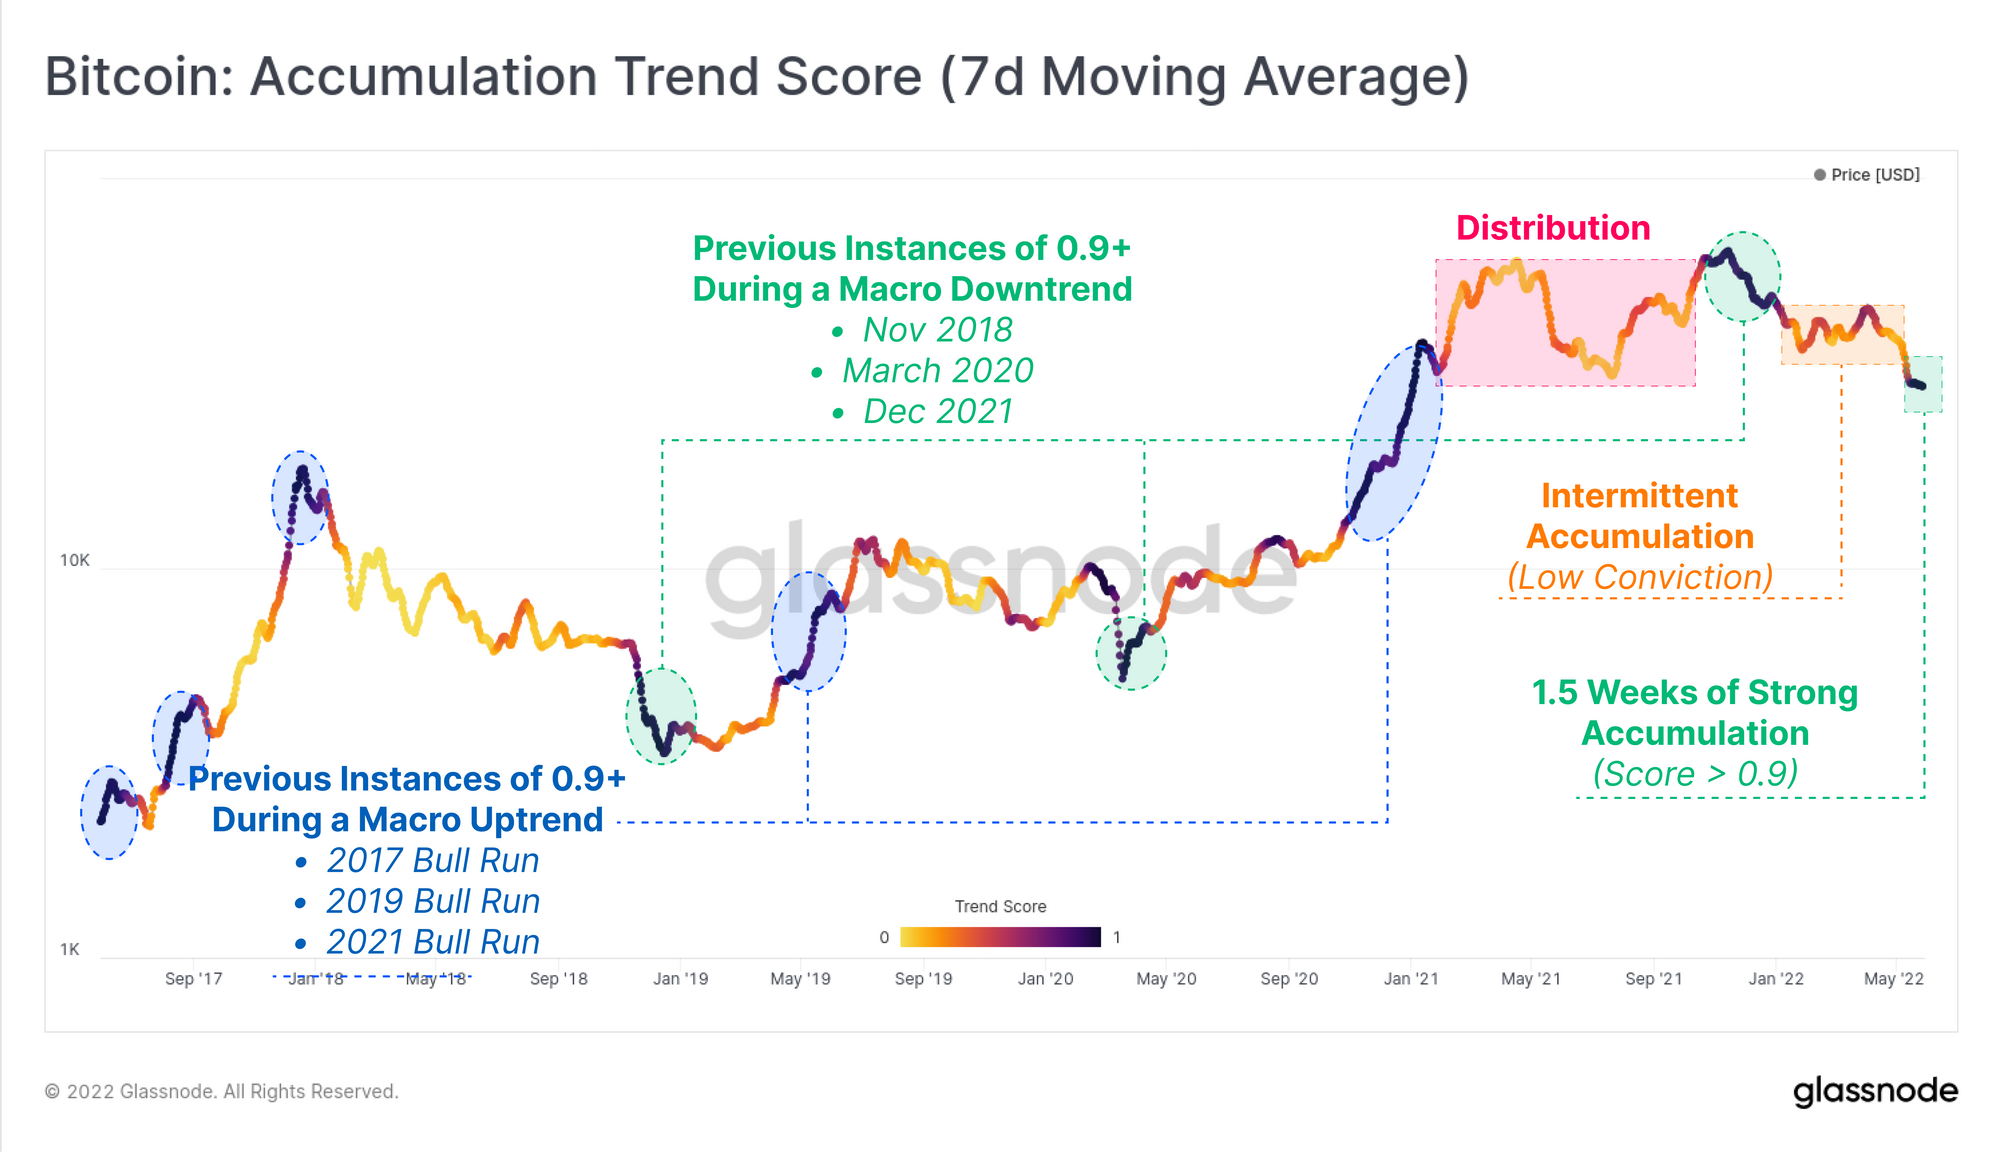 Glassnode: Bitcoin Market Behavior Has Now Returned To Strong Accumulation